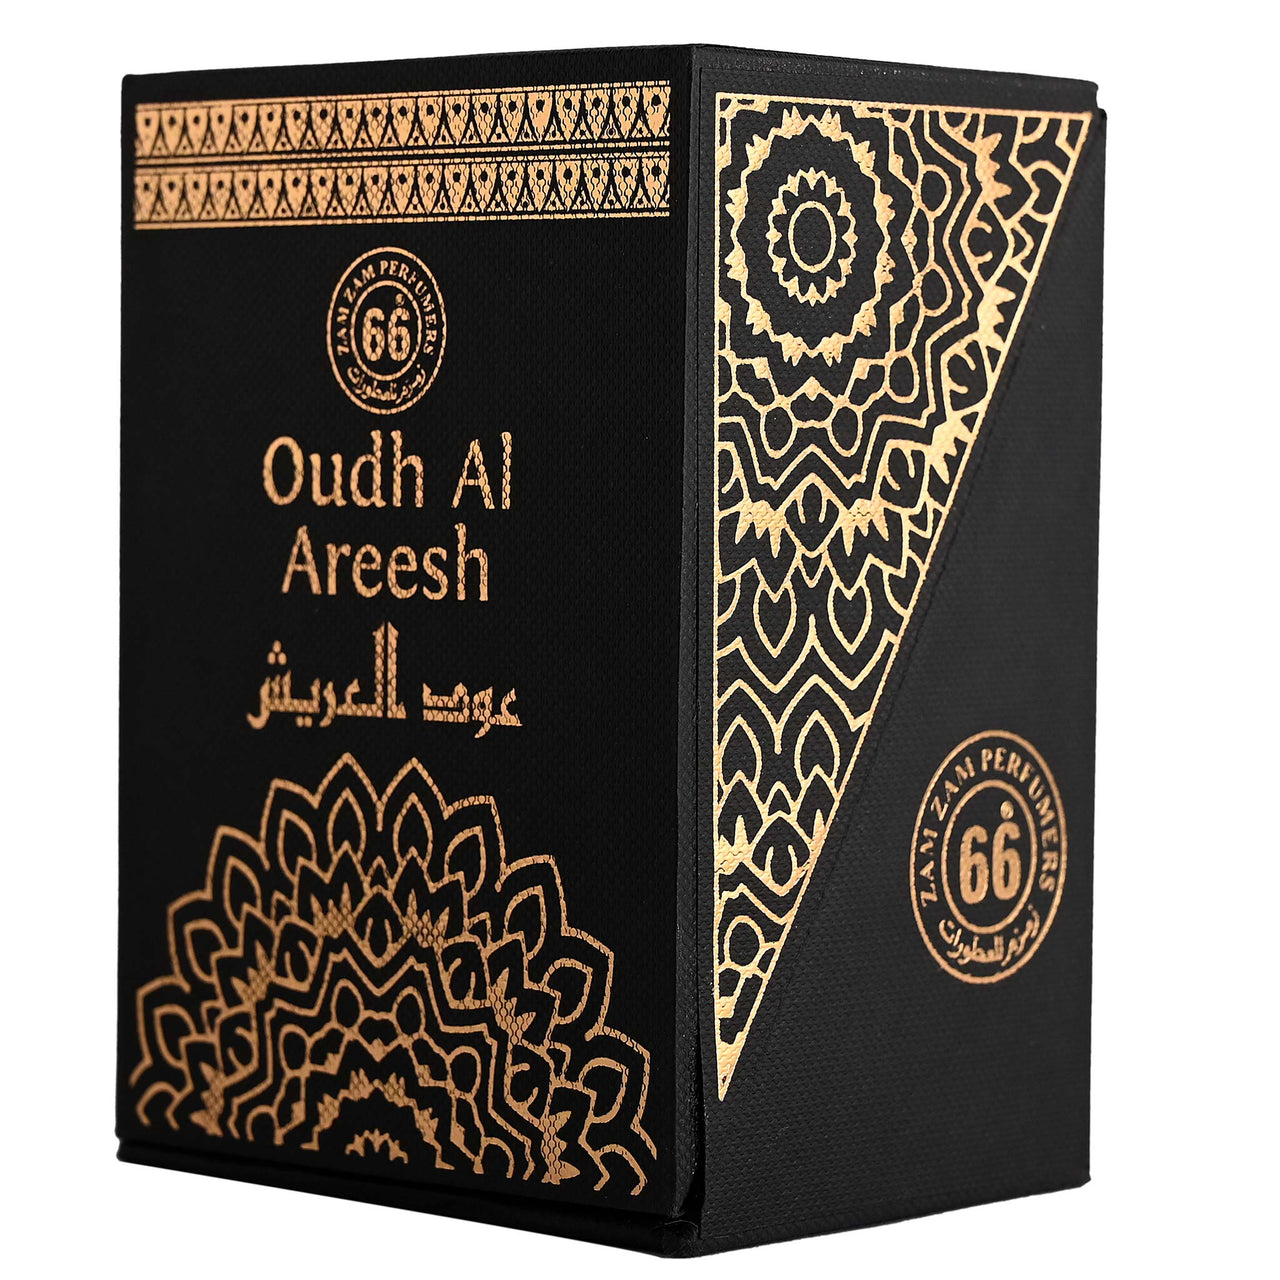 Oudh Al Areesh